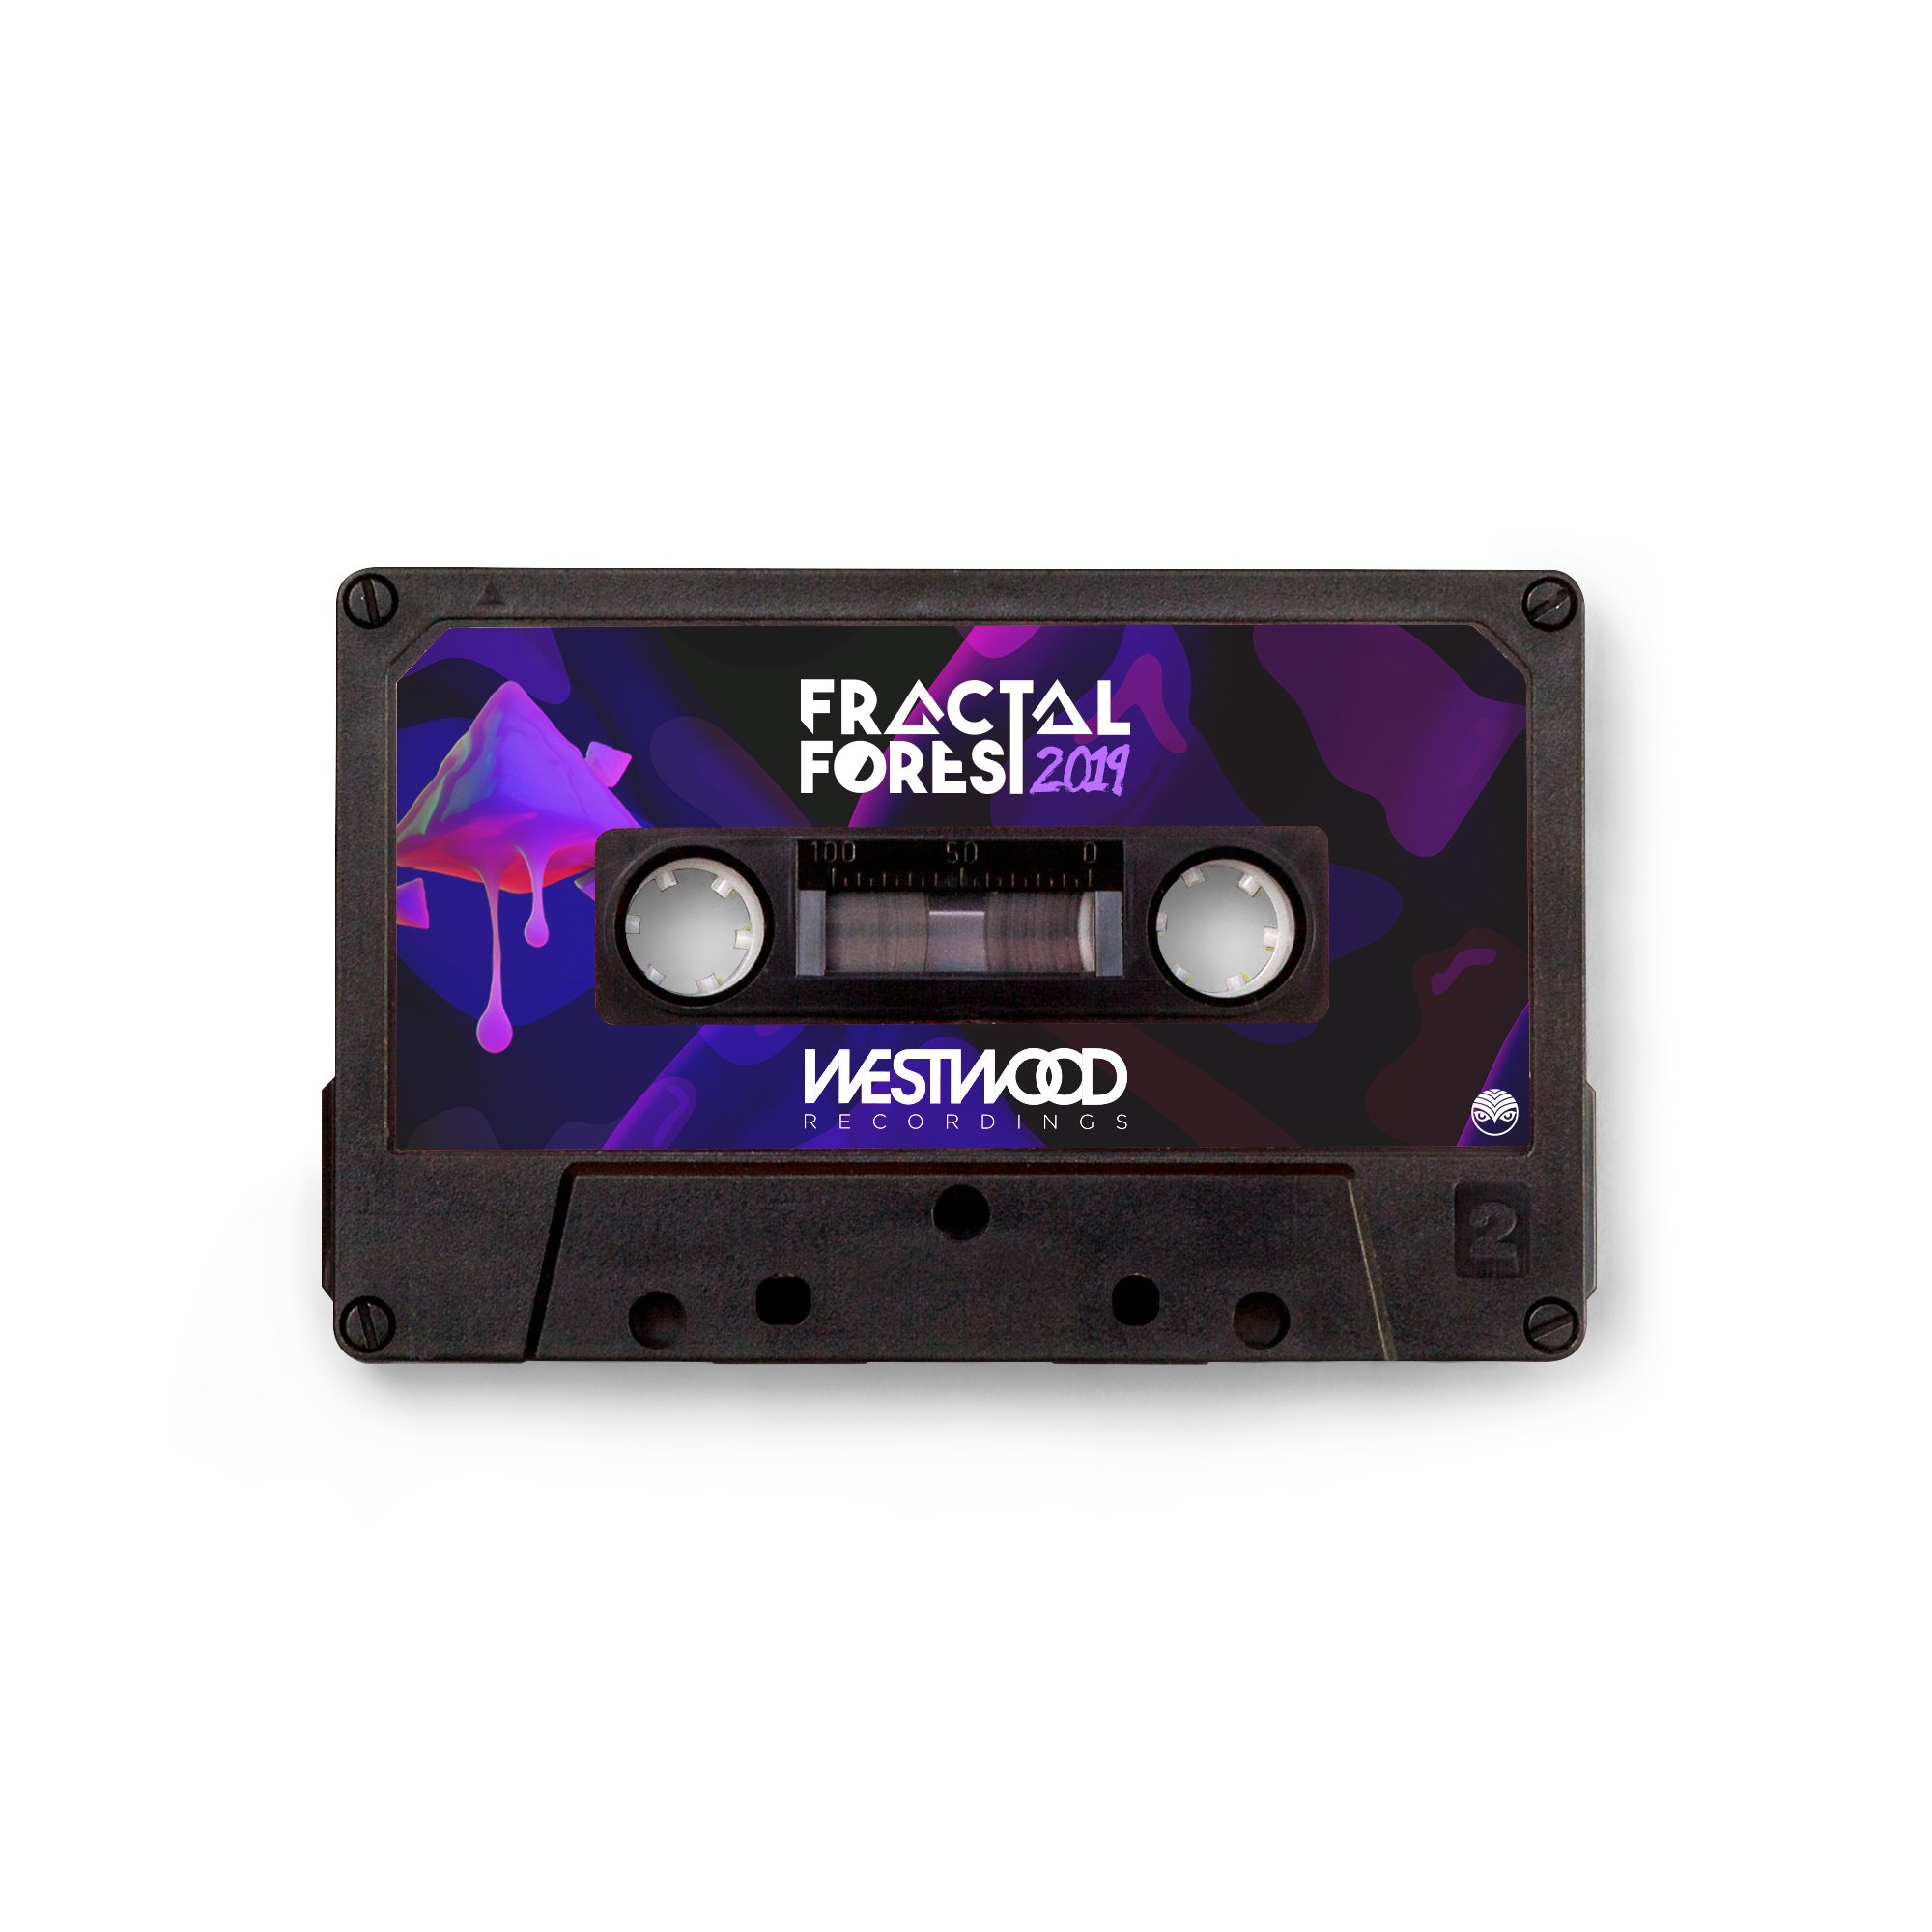 2019 Fractal Forest Cassette